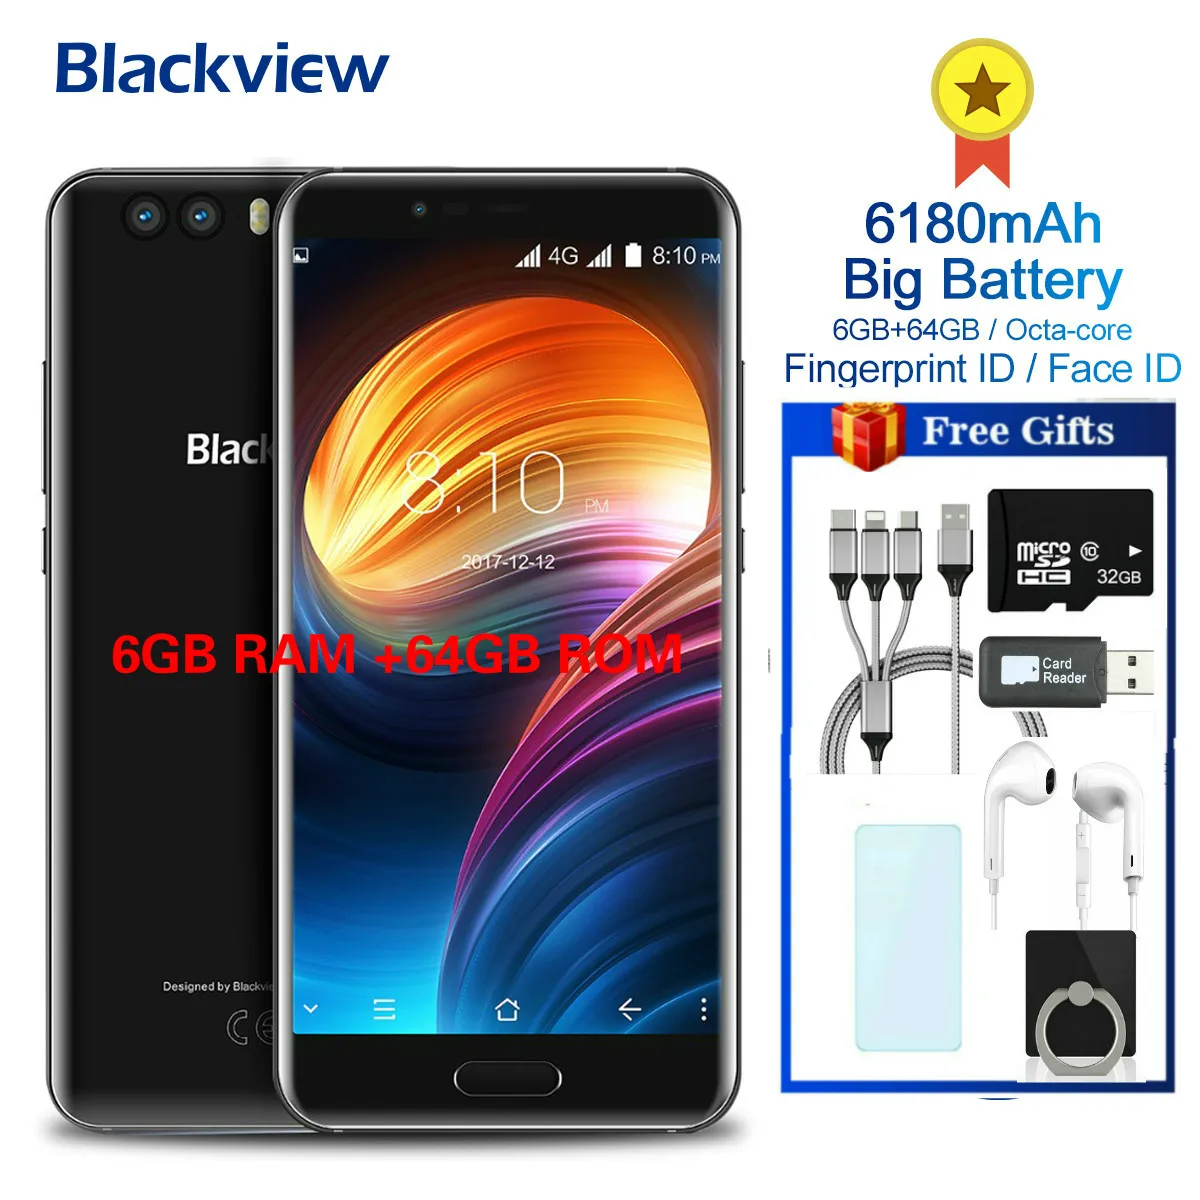 Blackview P6000 5,5 дюймов in-cell FHD Helio P25 6 ГБ + 64 Гб Смартфон лицо ID камера 21 МП 4G Dual SIM мобильный телефон 6180 мАч батарея